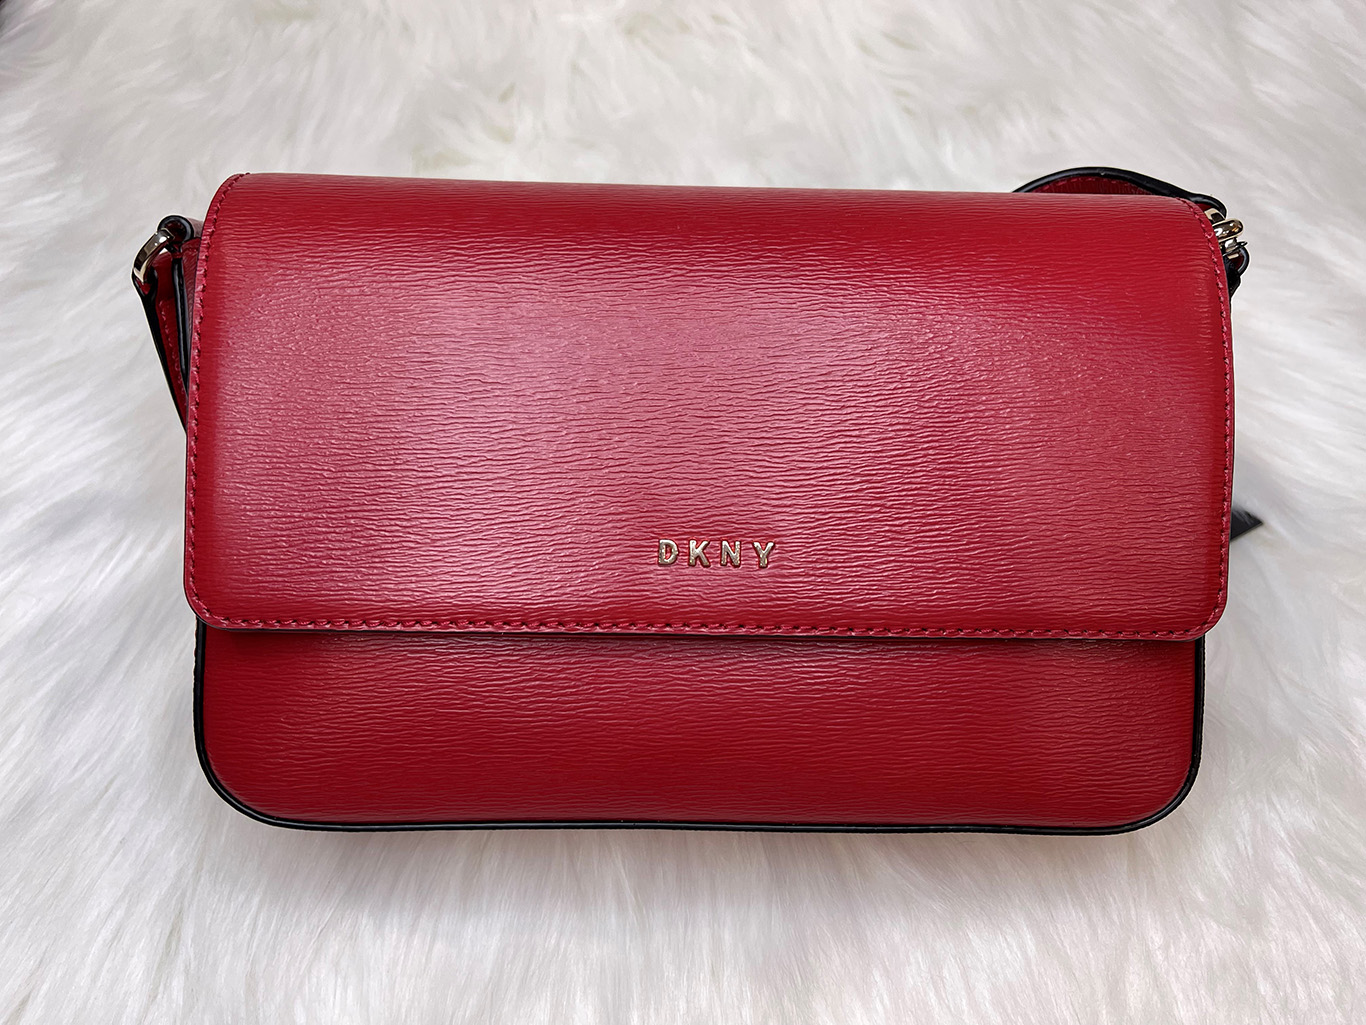 Red Dkny Handbag - CakeCentral.com